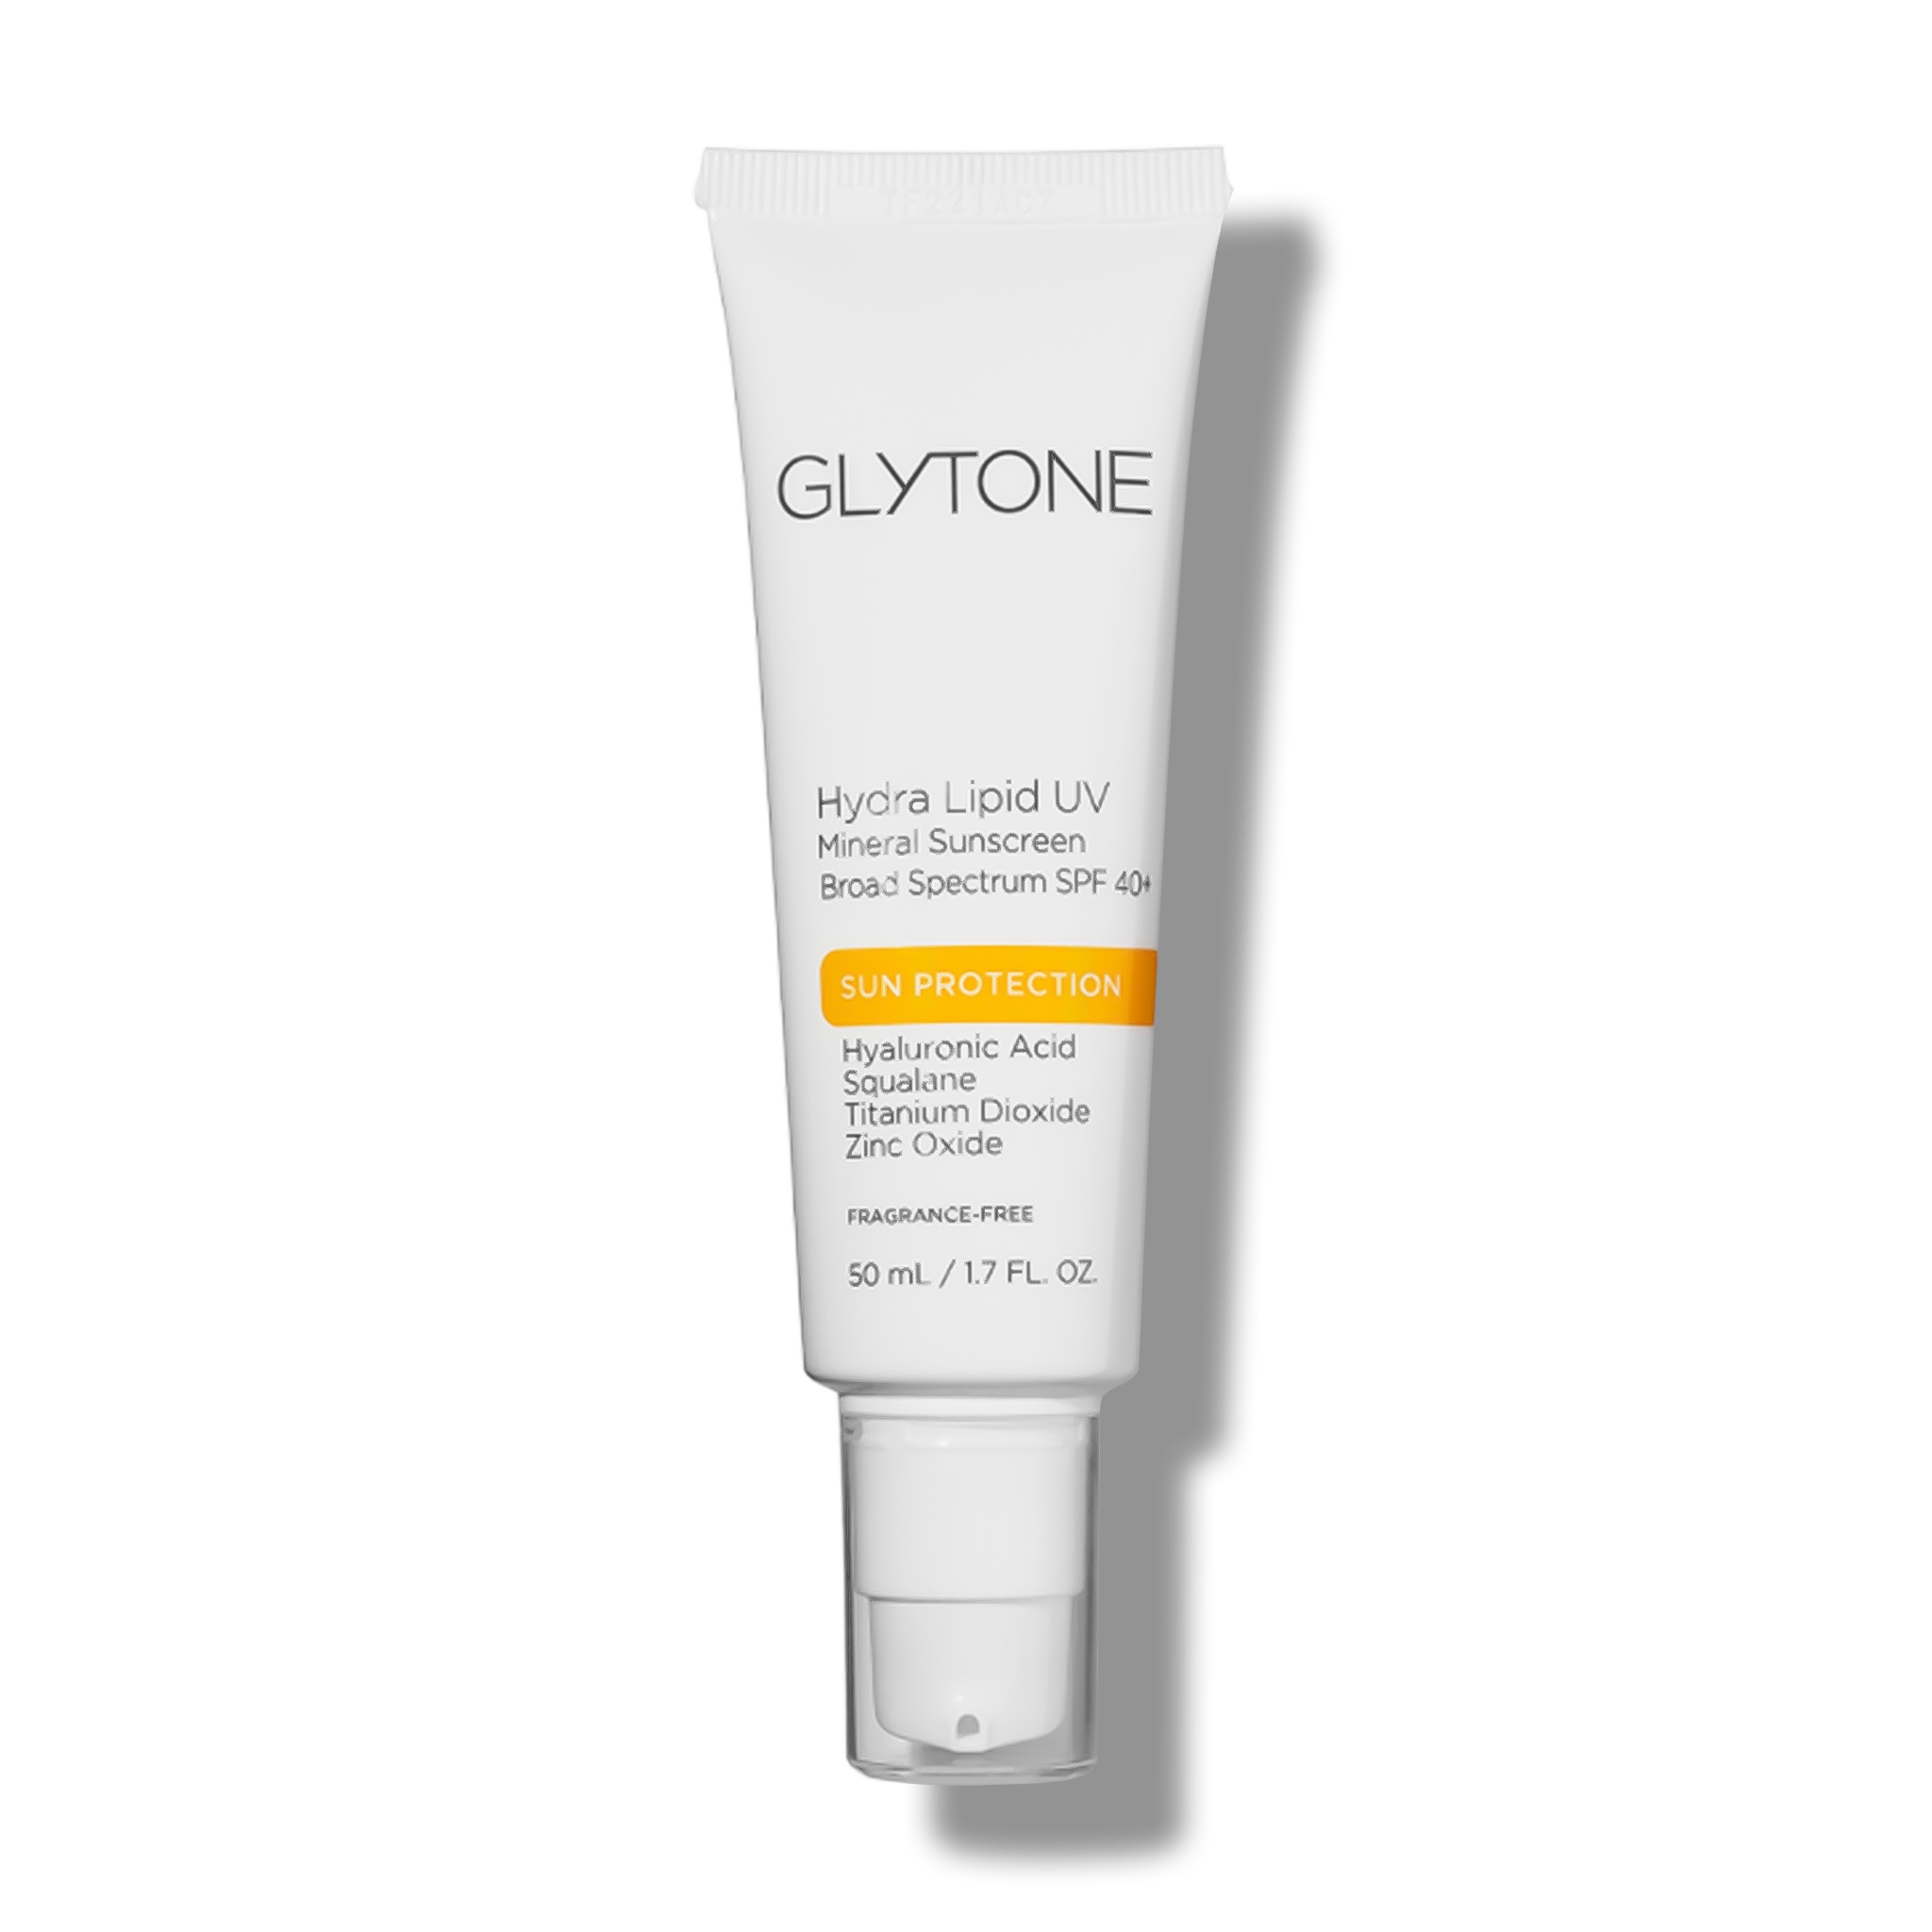 Glytone Hydra Lipid UV Mineral Sunscreen BS SPF 40+